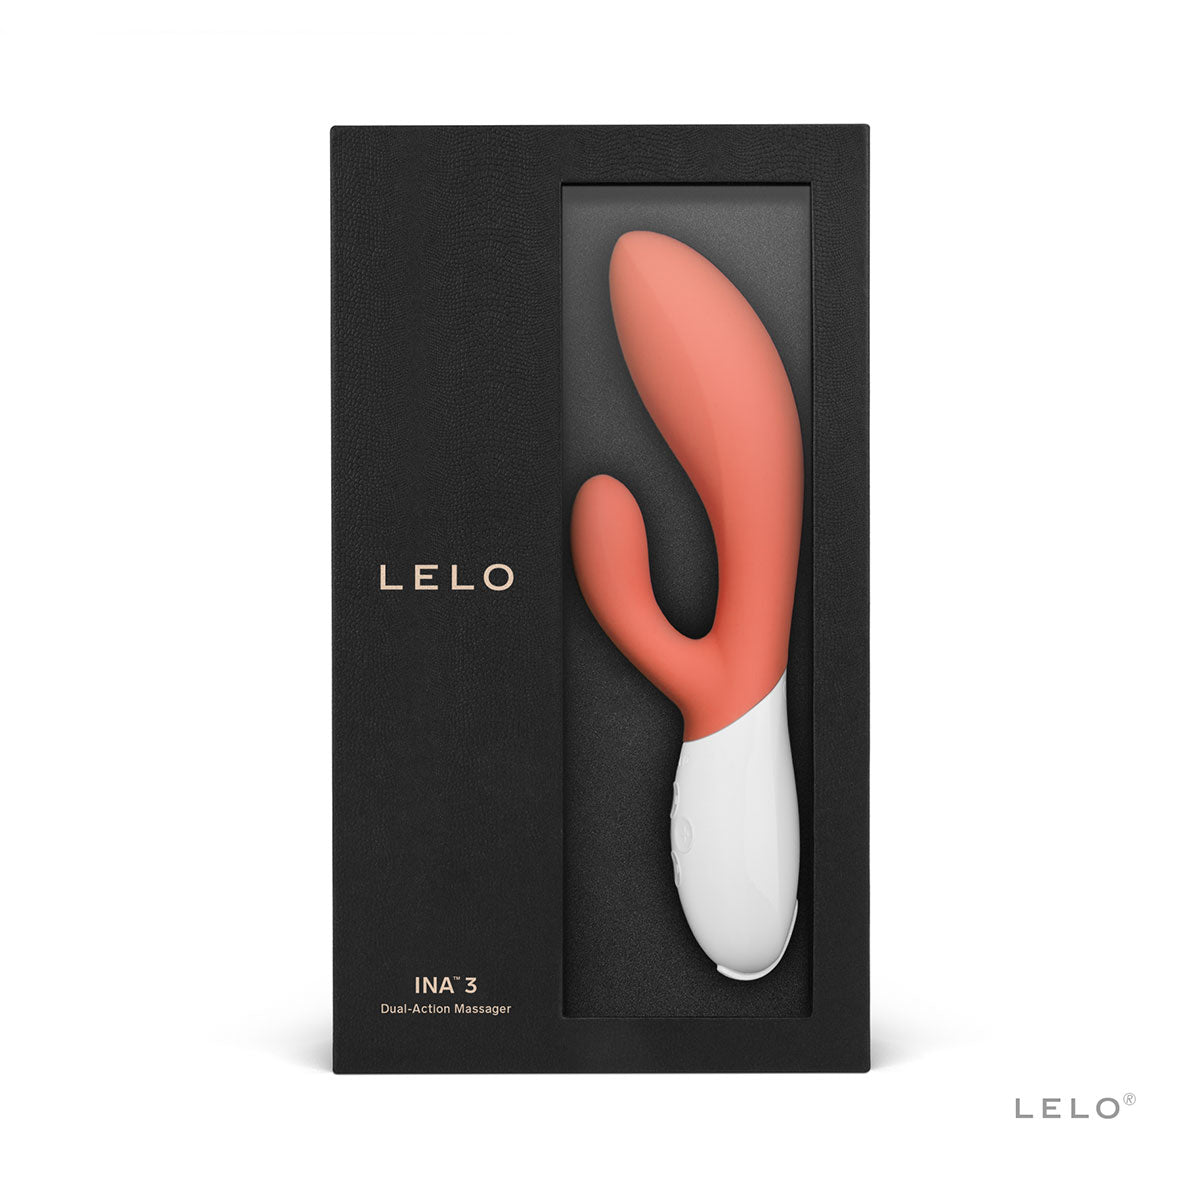 LELO Ina 3 - Coral Red Rabbit Vibrator